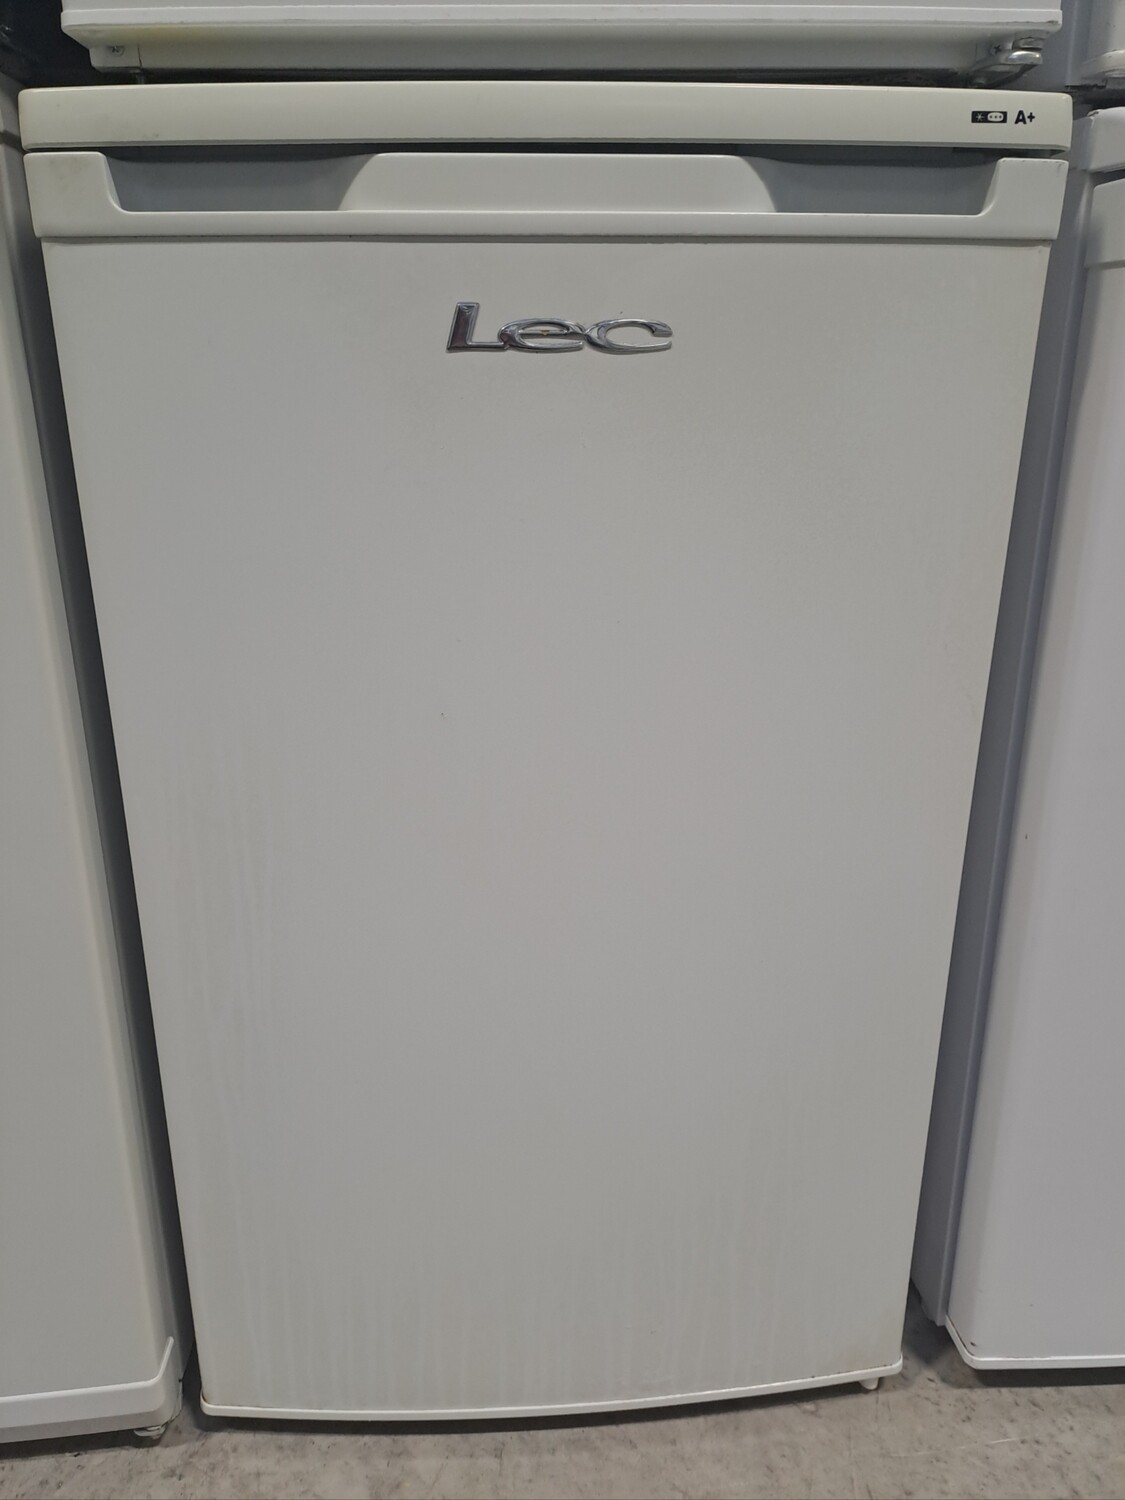 Lec Under Counter Freezer White H85 x W50 Refurbished 6 Month Guarantee